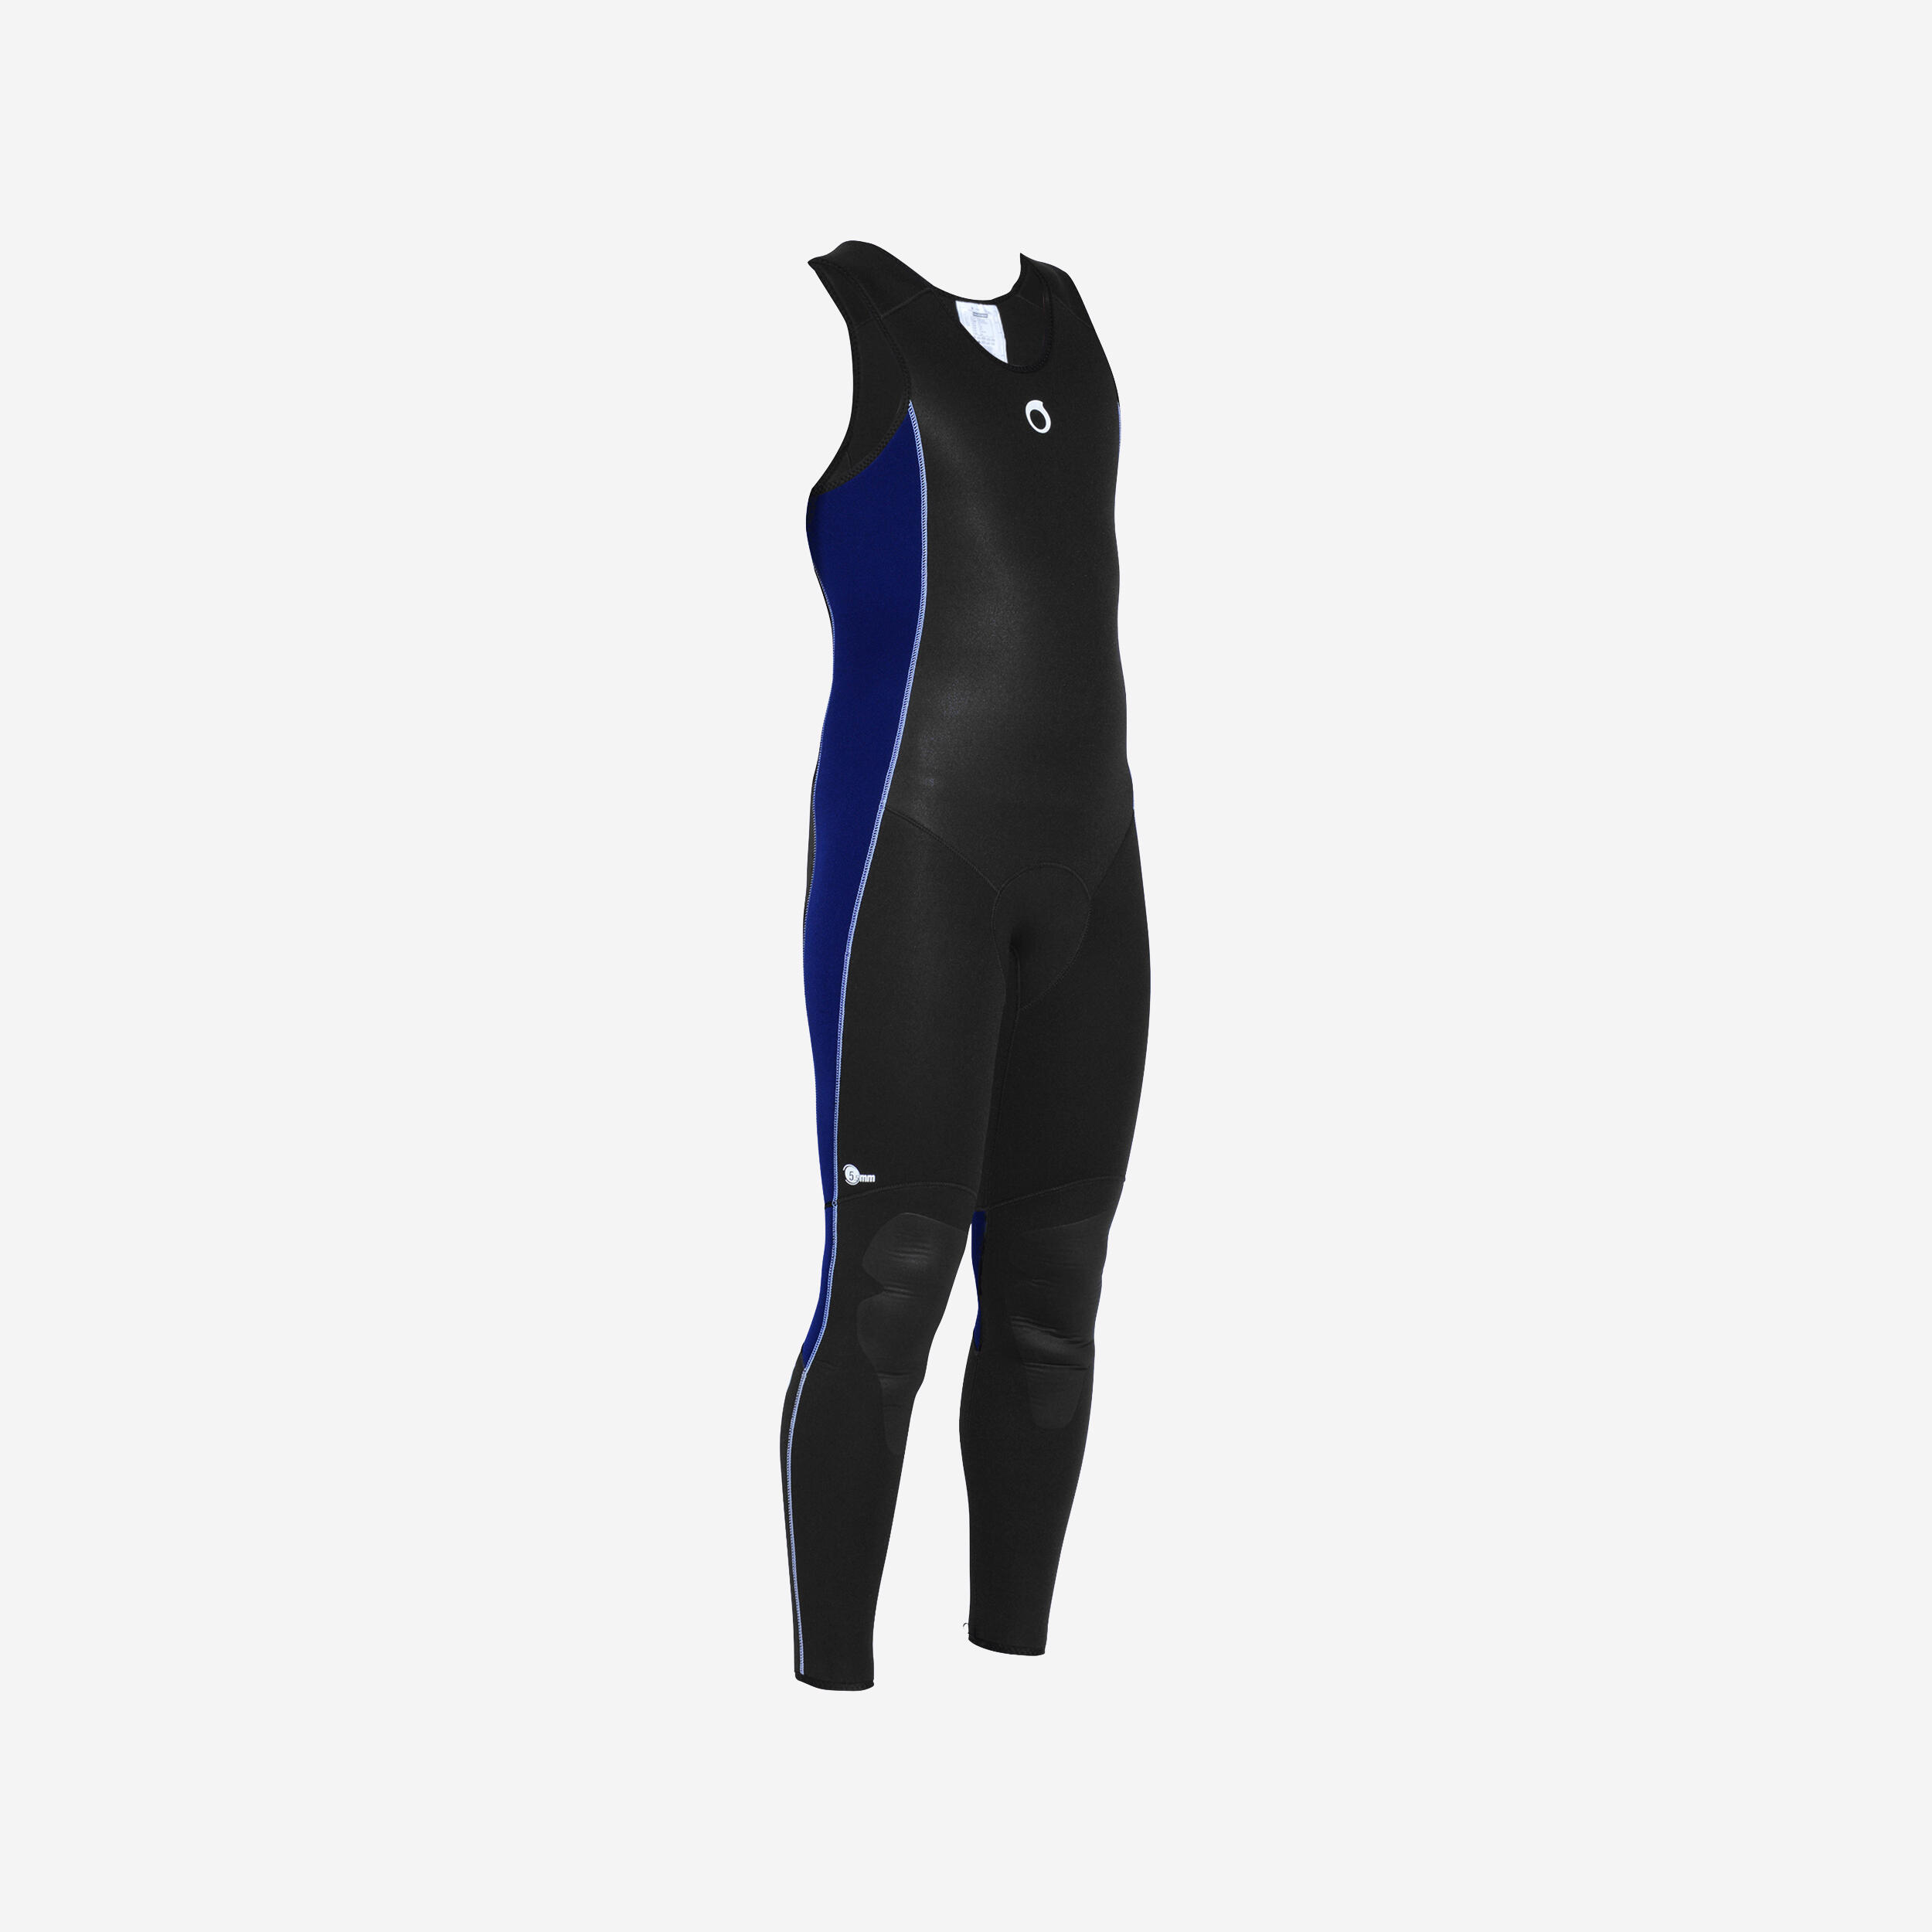 Men's Scuba Diving Sleeveless Wetsuit 5 